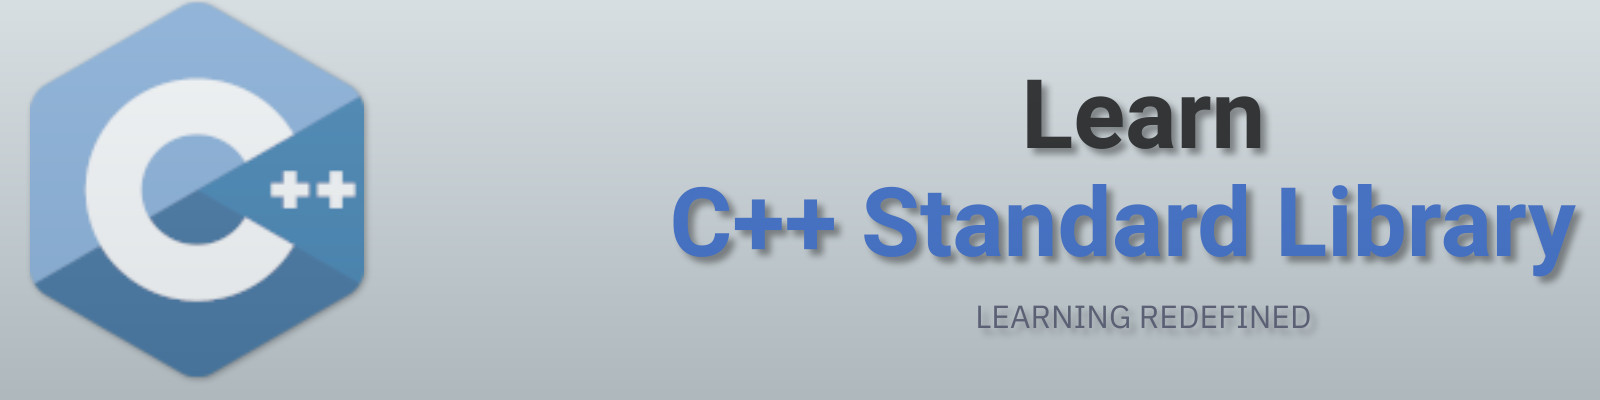 C++ tutorial - Learn C++